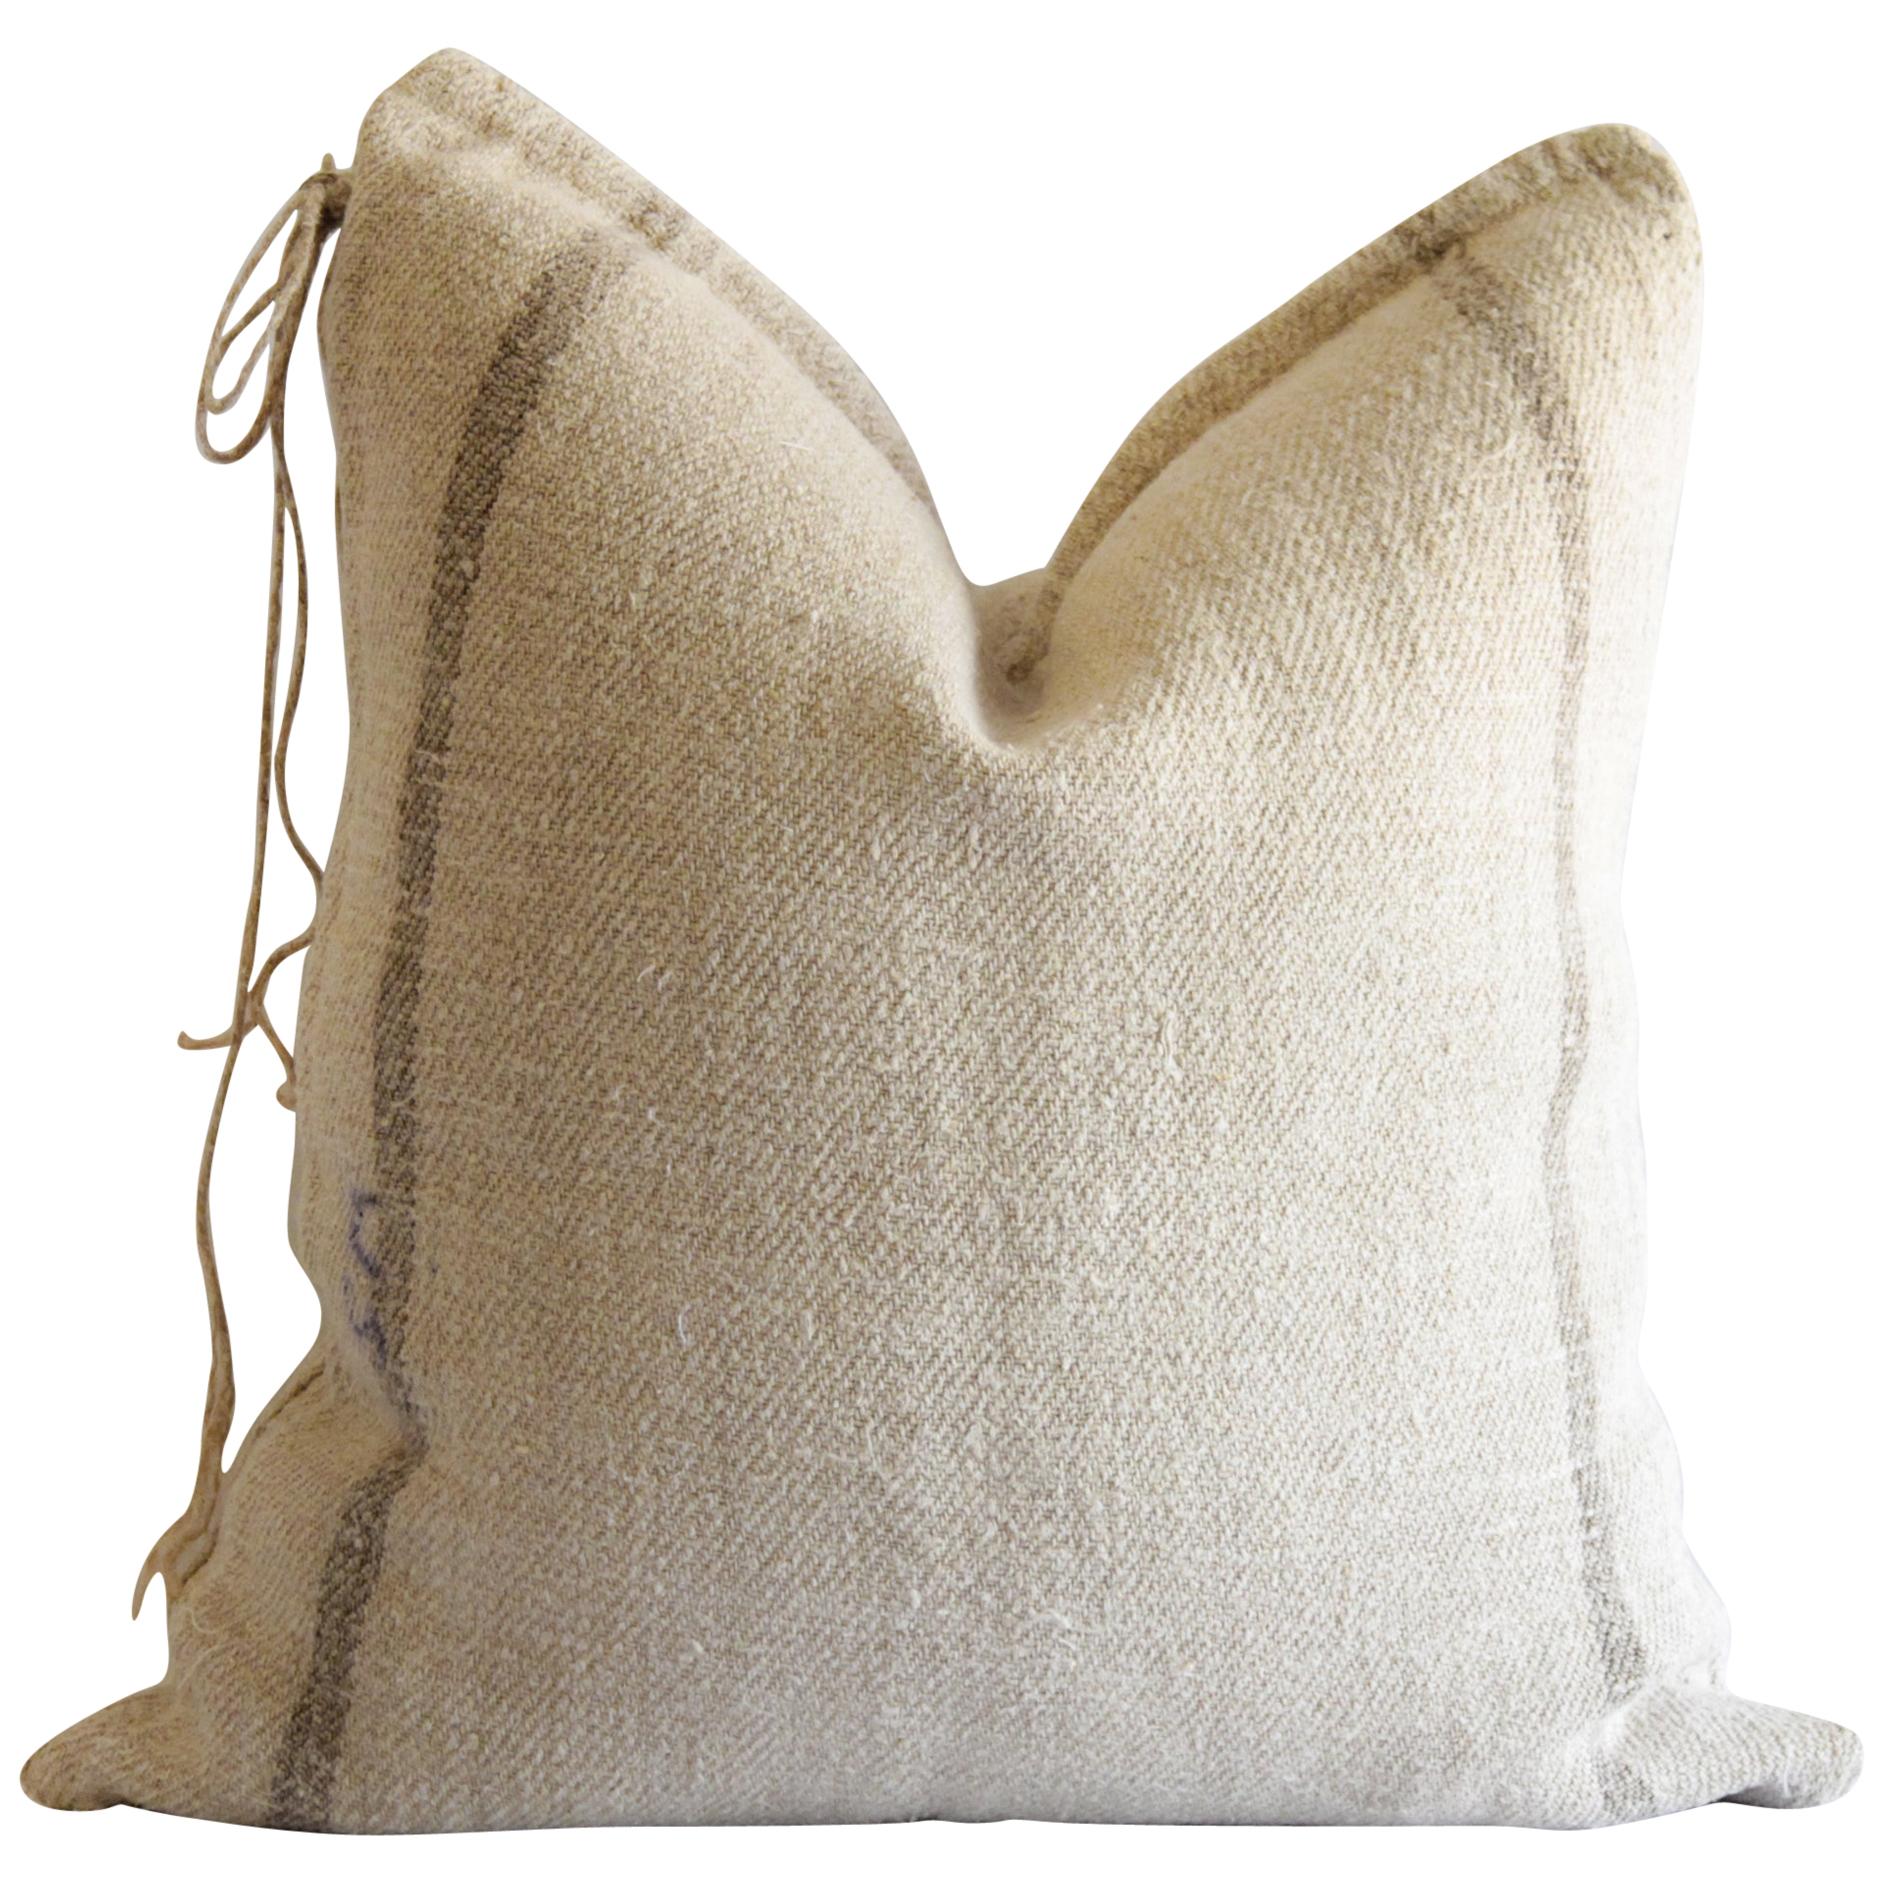 Antique German Grain Sack Pillow with Brown Stripes